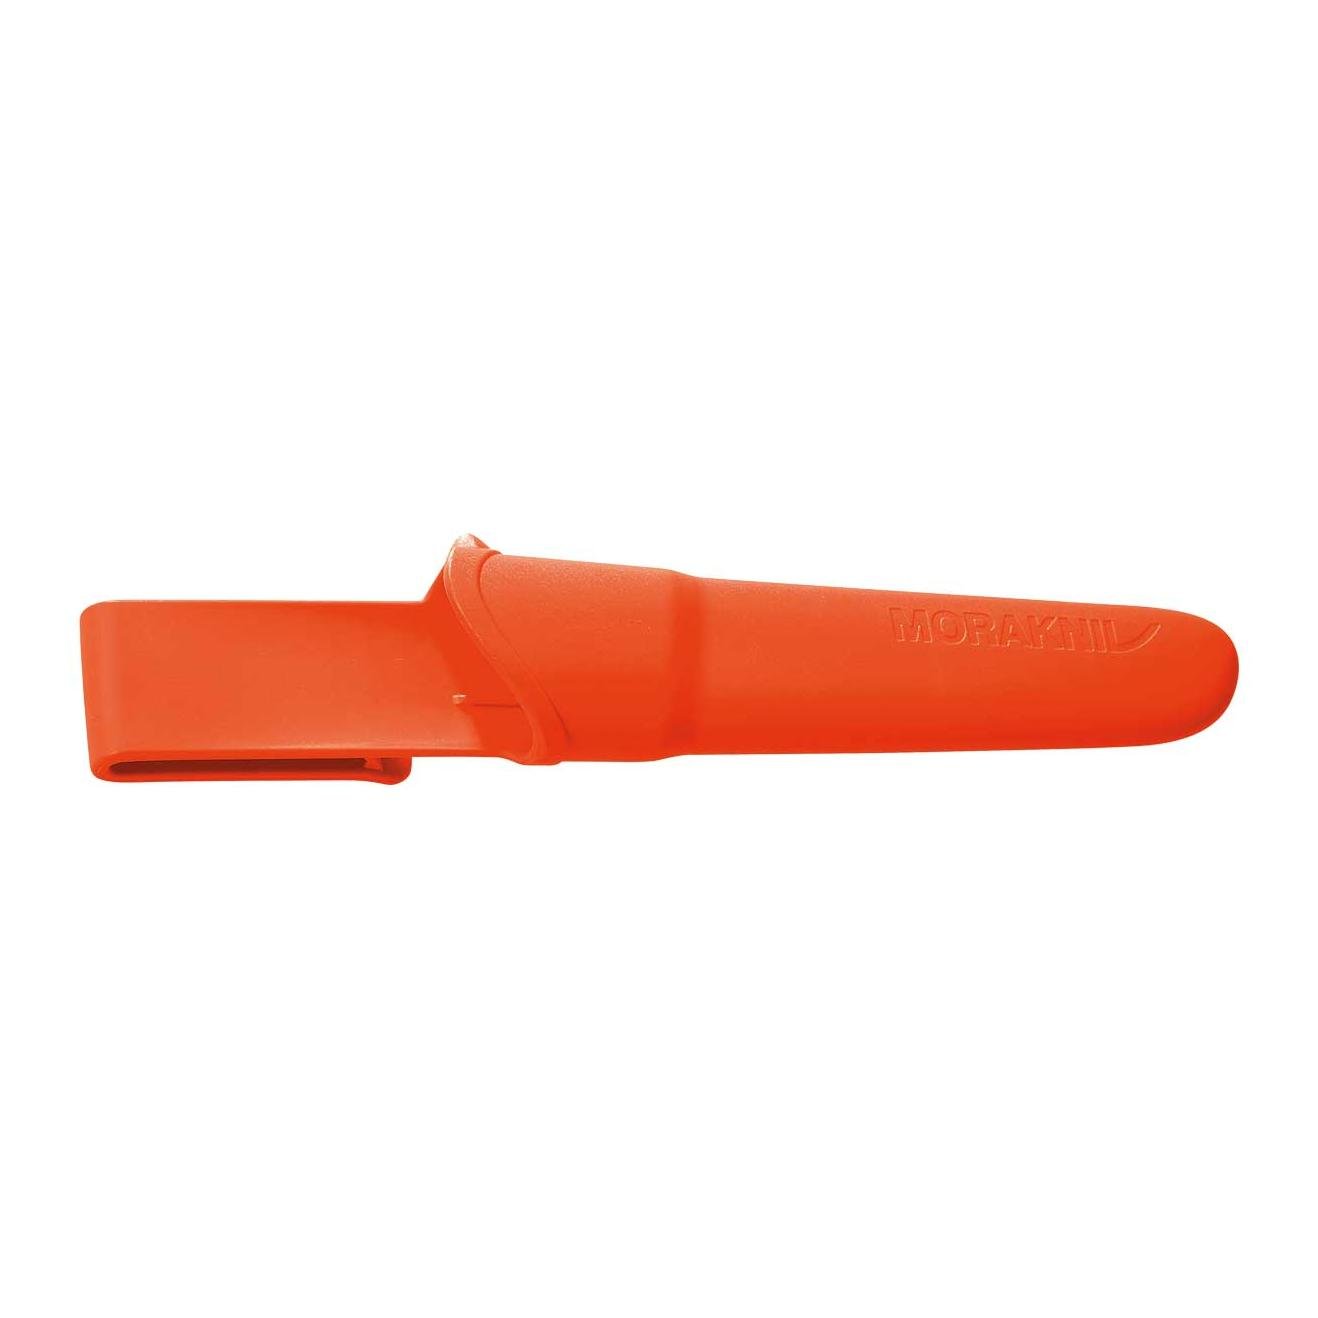 Jagd-/Outdoormesser COMPANION orange